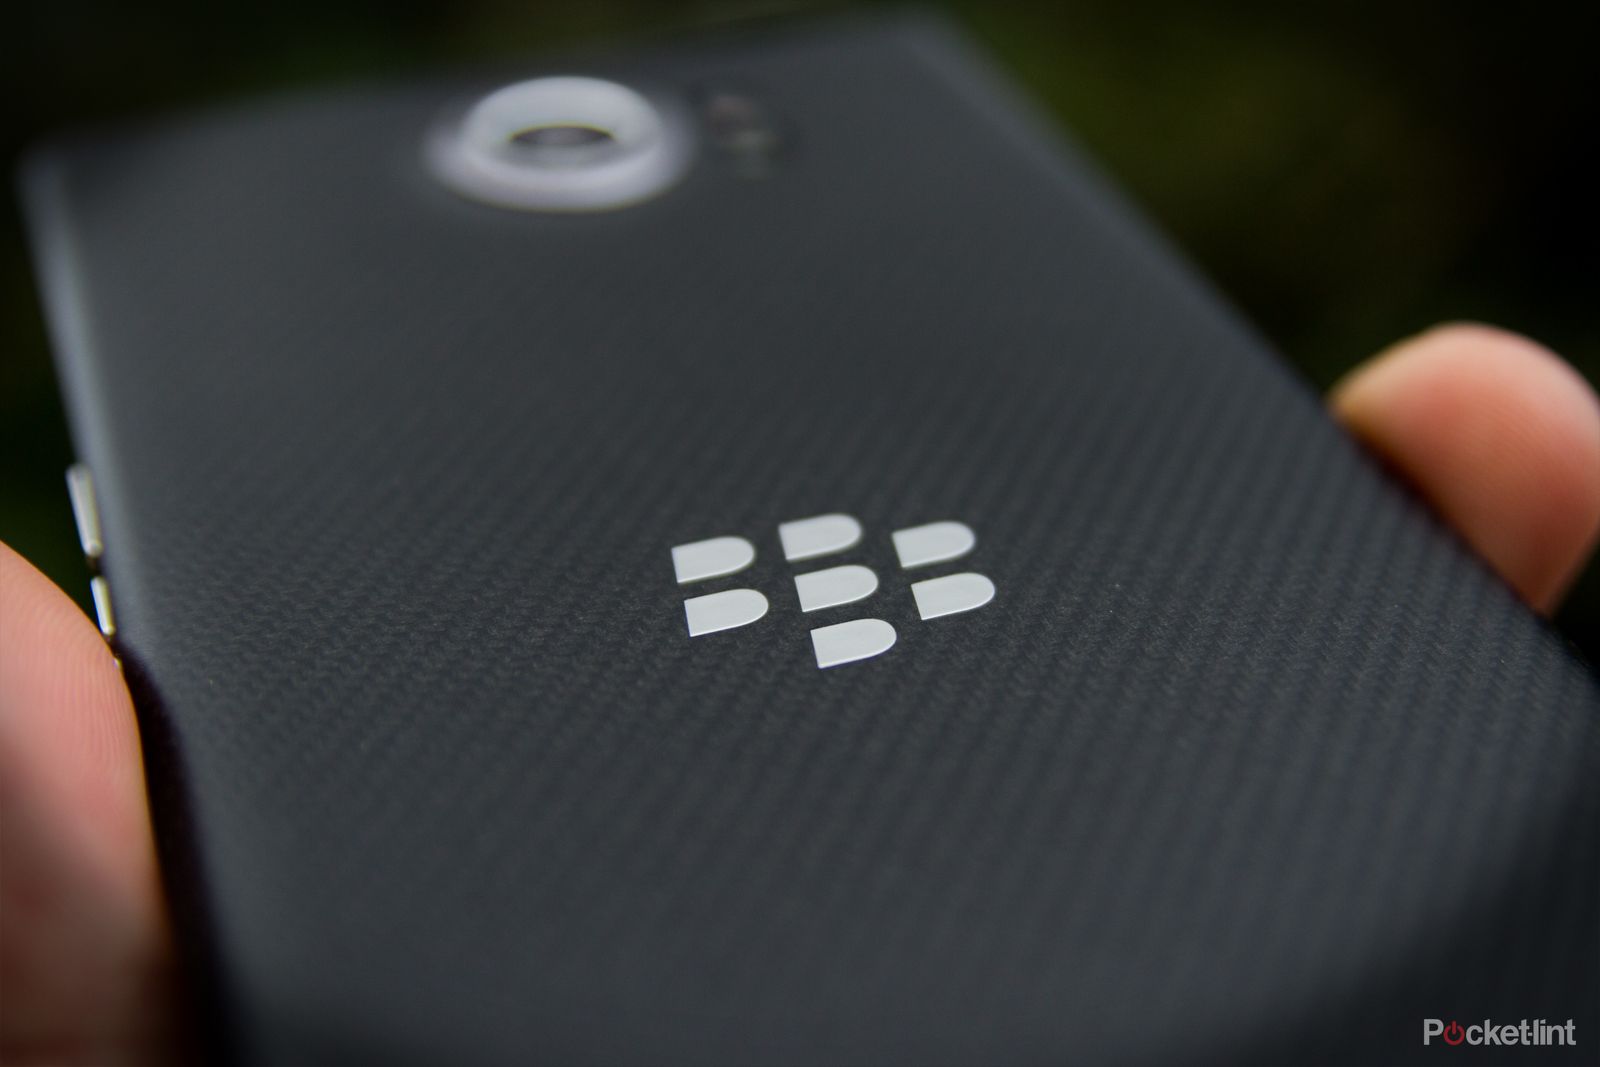 blackberry s smartphone roadmap for 2016 17 revealed image 1